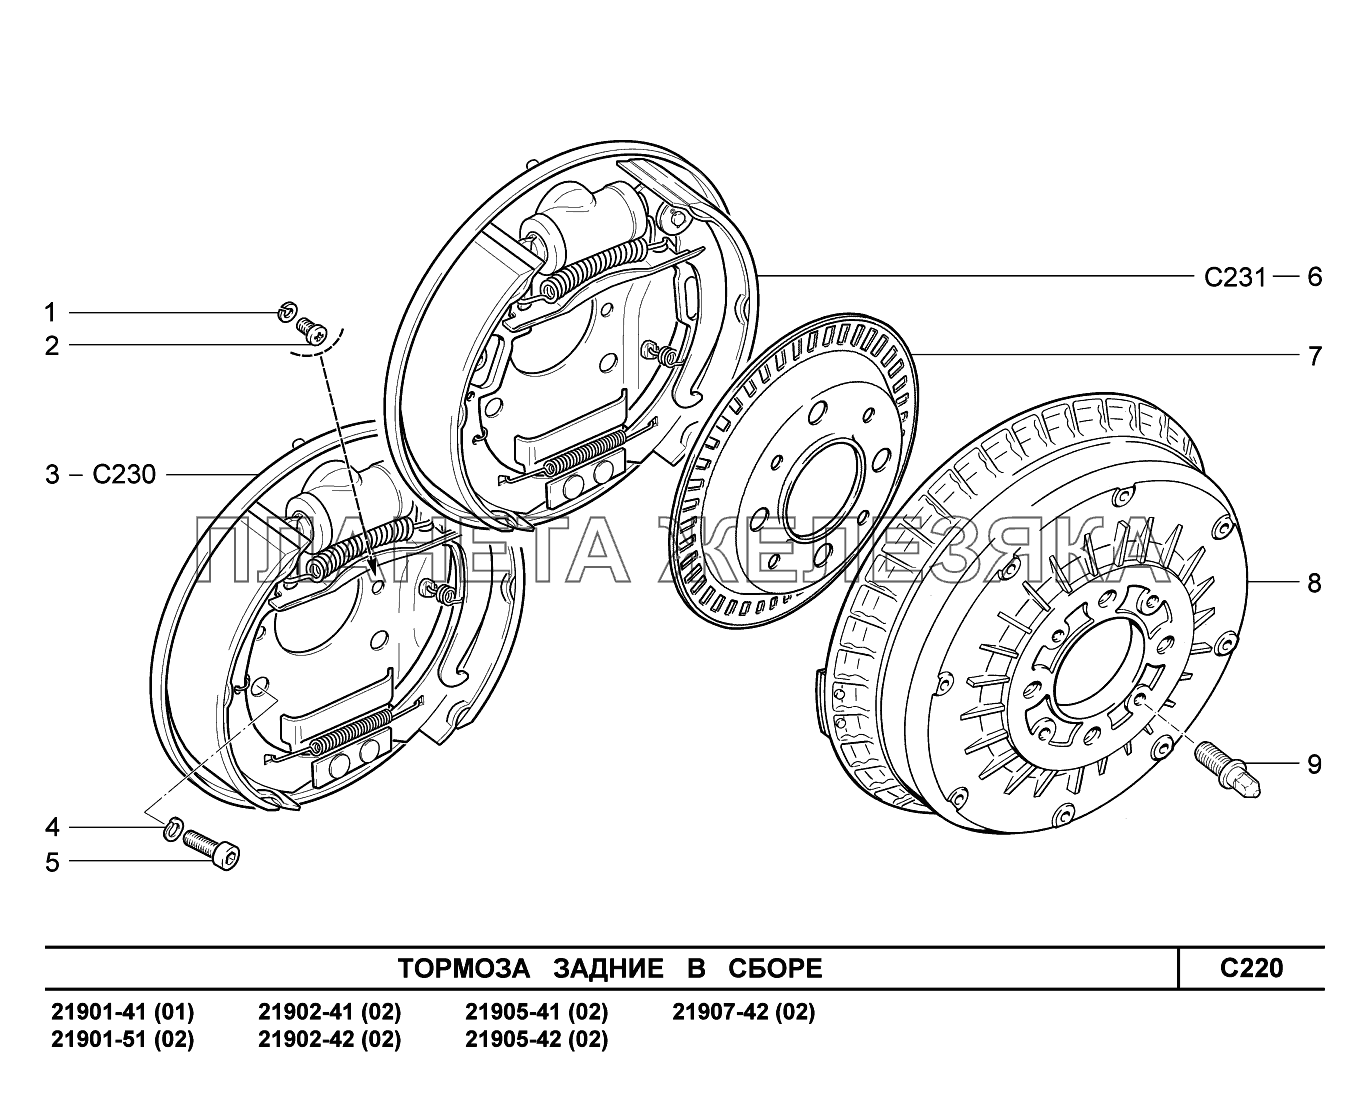 C220. Тормоза задние в сборе Lada Granta-2190